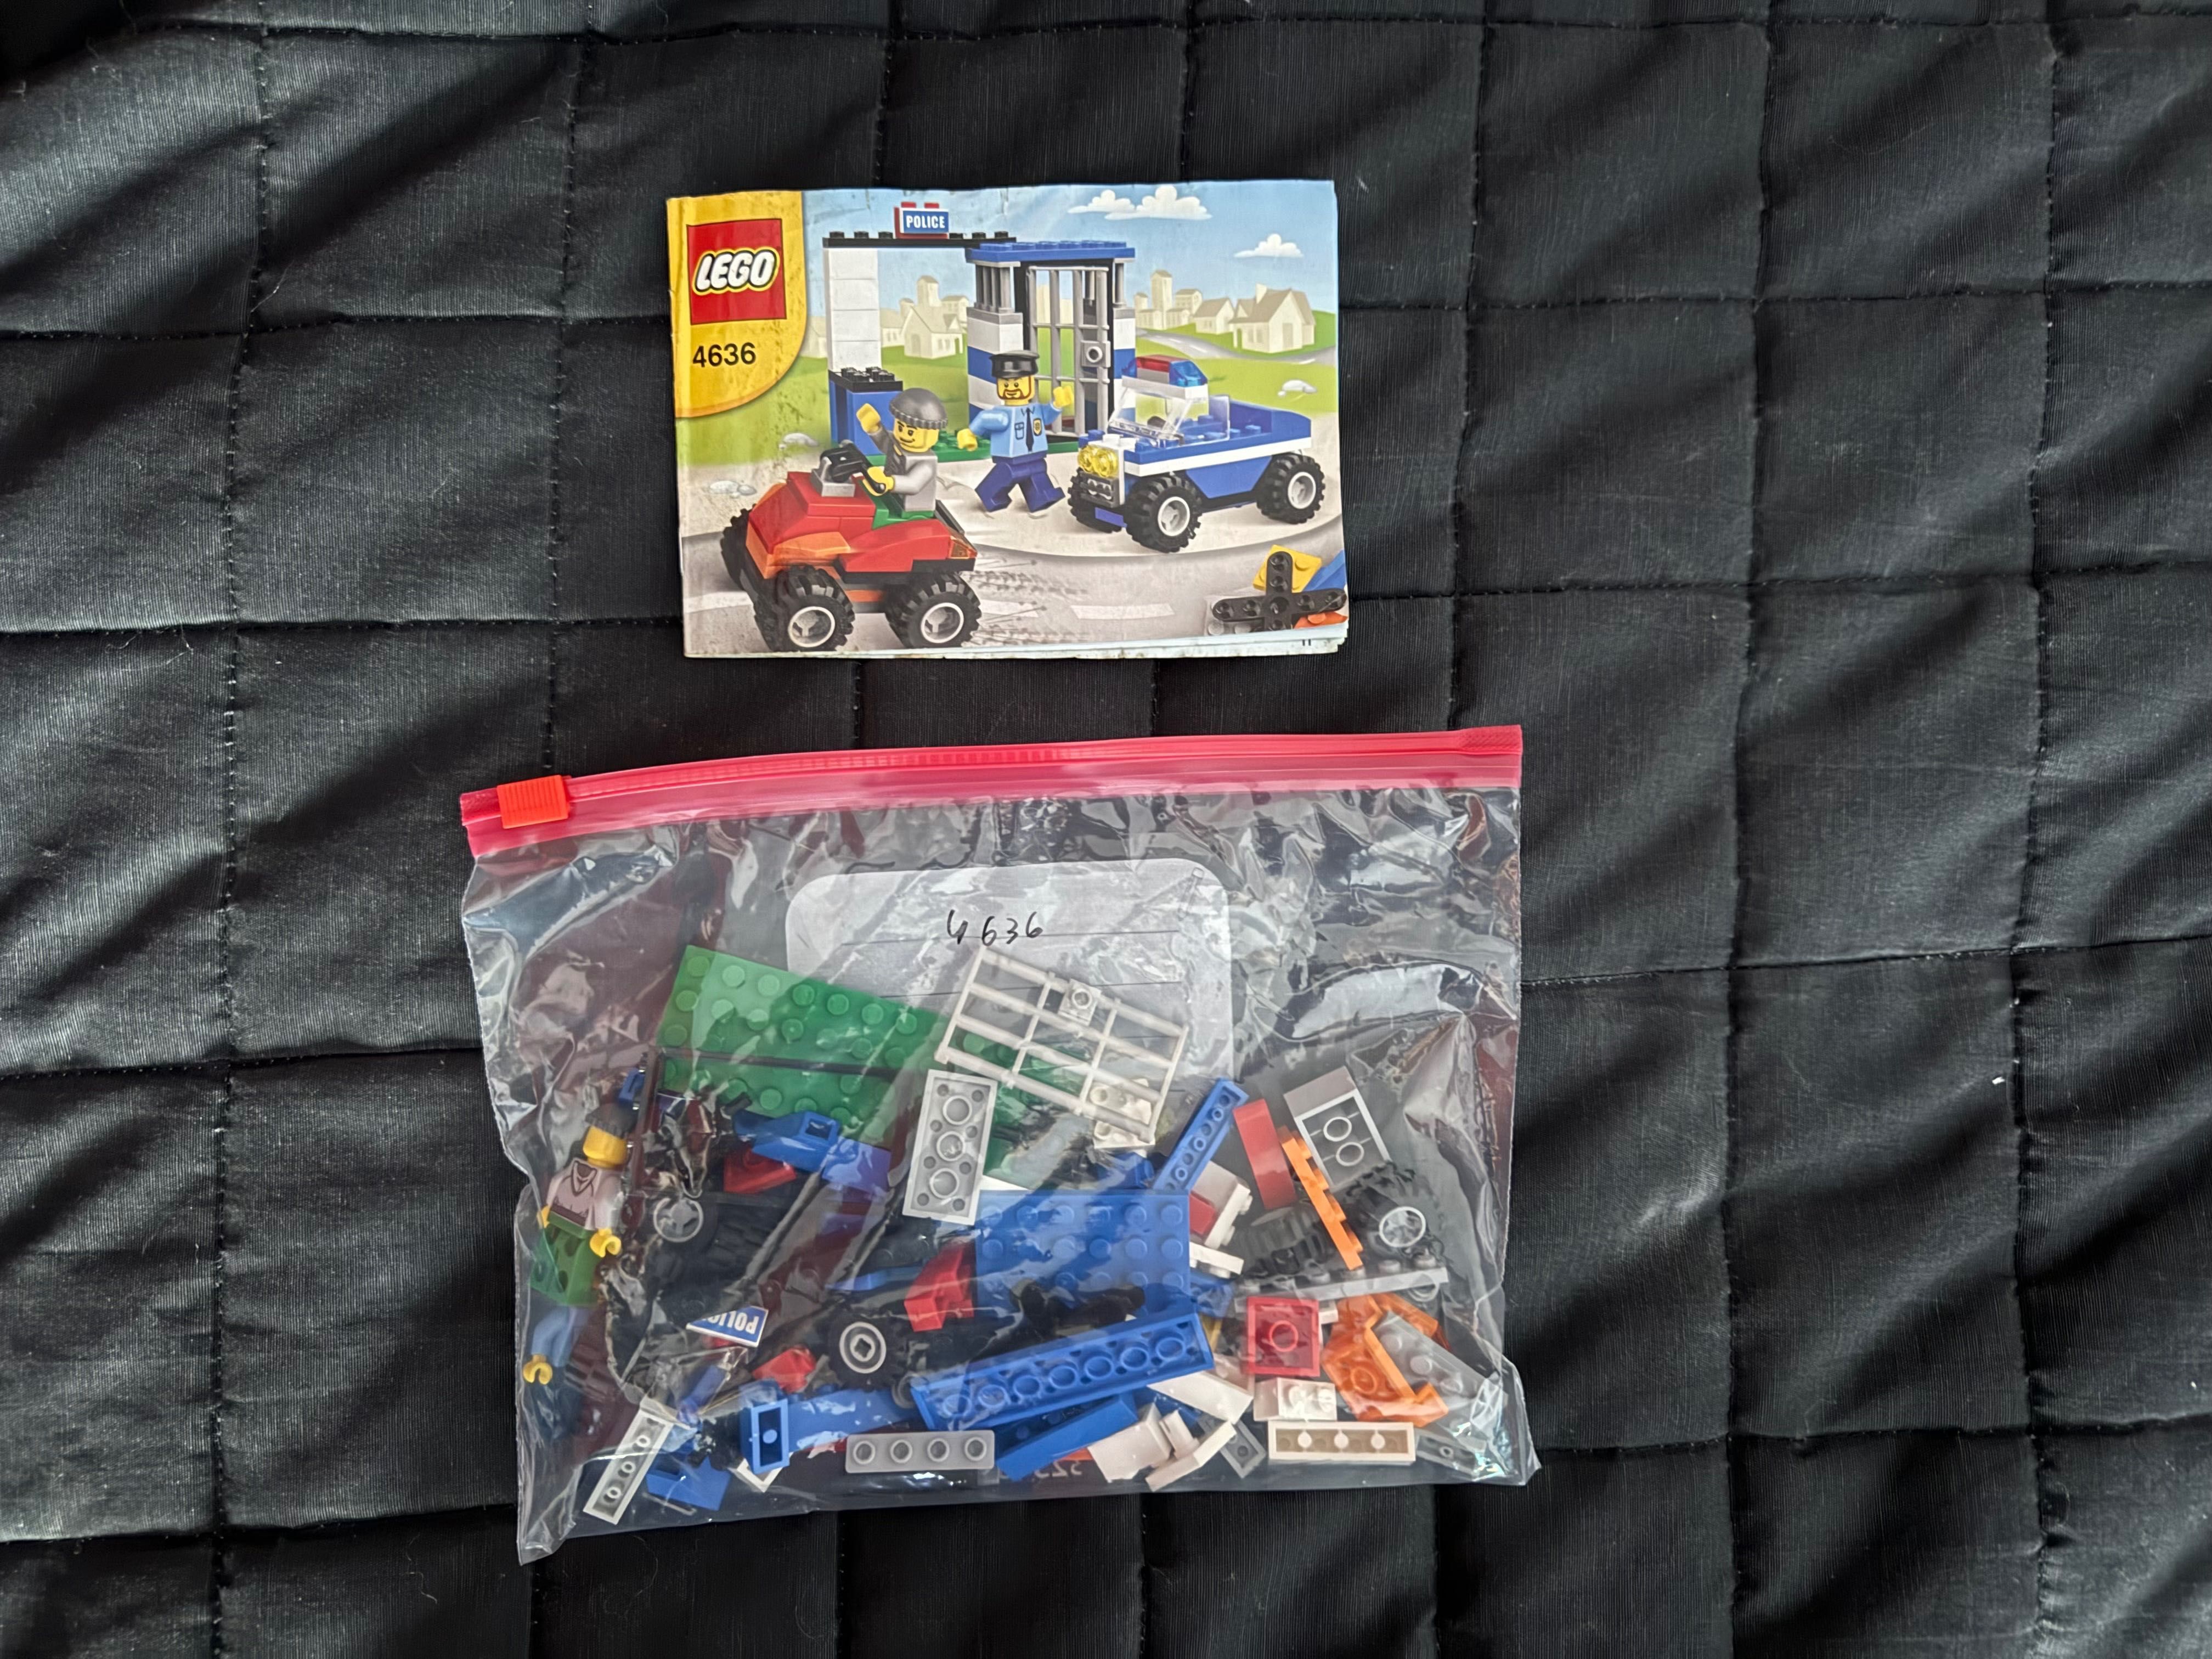 Lego Police Building Set (4636)